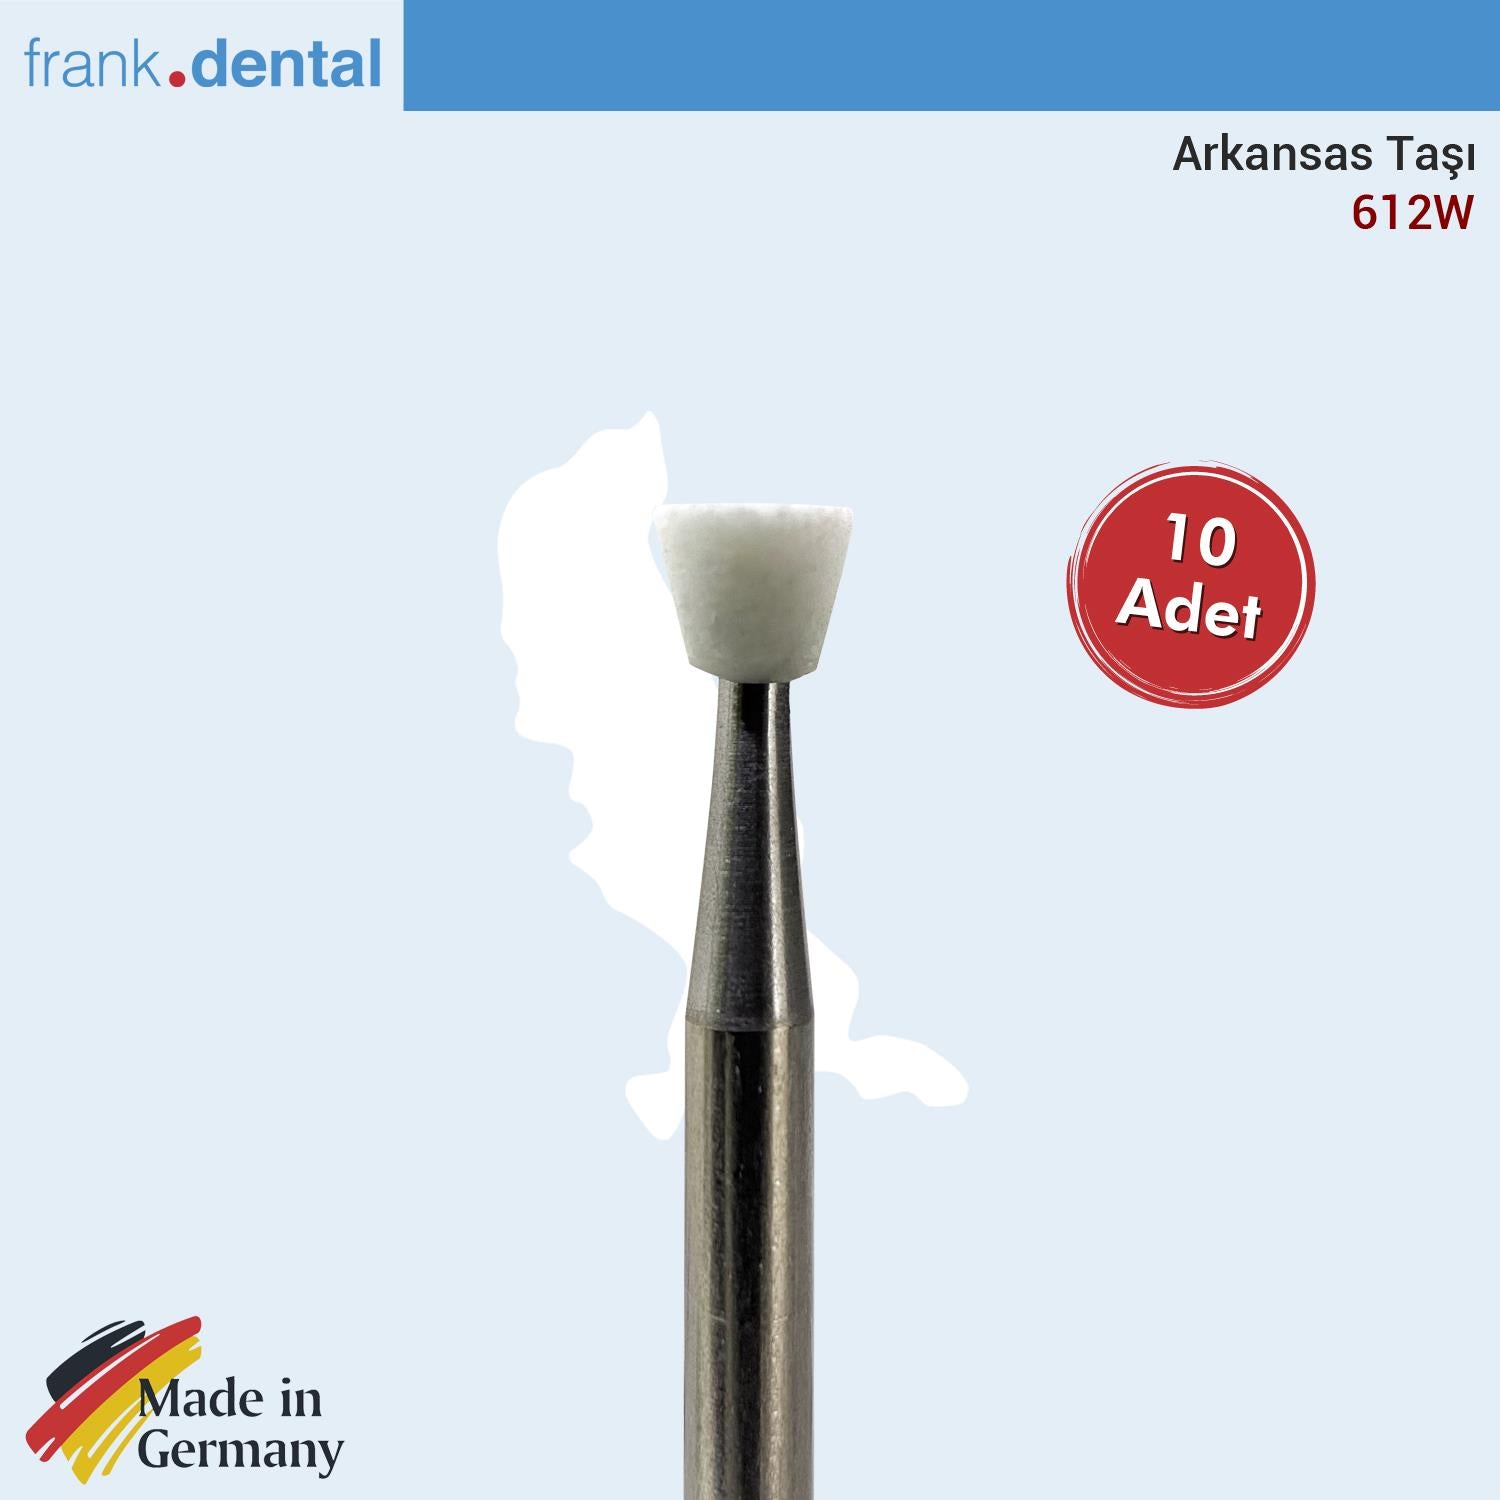 DentrealStore - Frank Dental Arkansas Stone 612W - 10 Pcs - Composite and Ceramic Abrasive